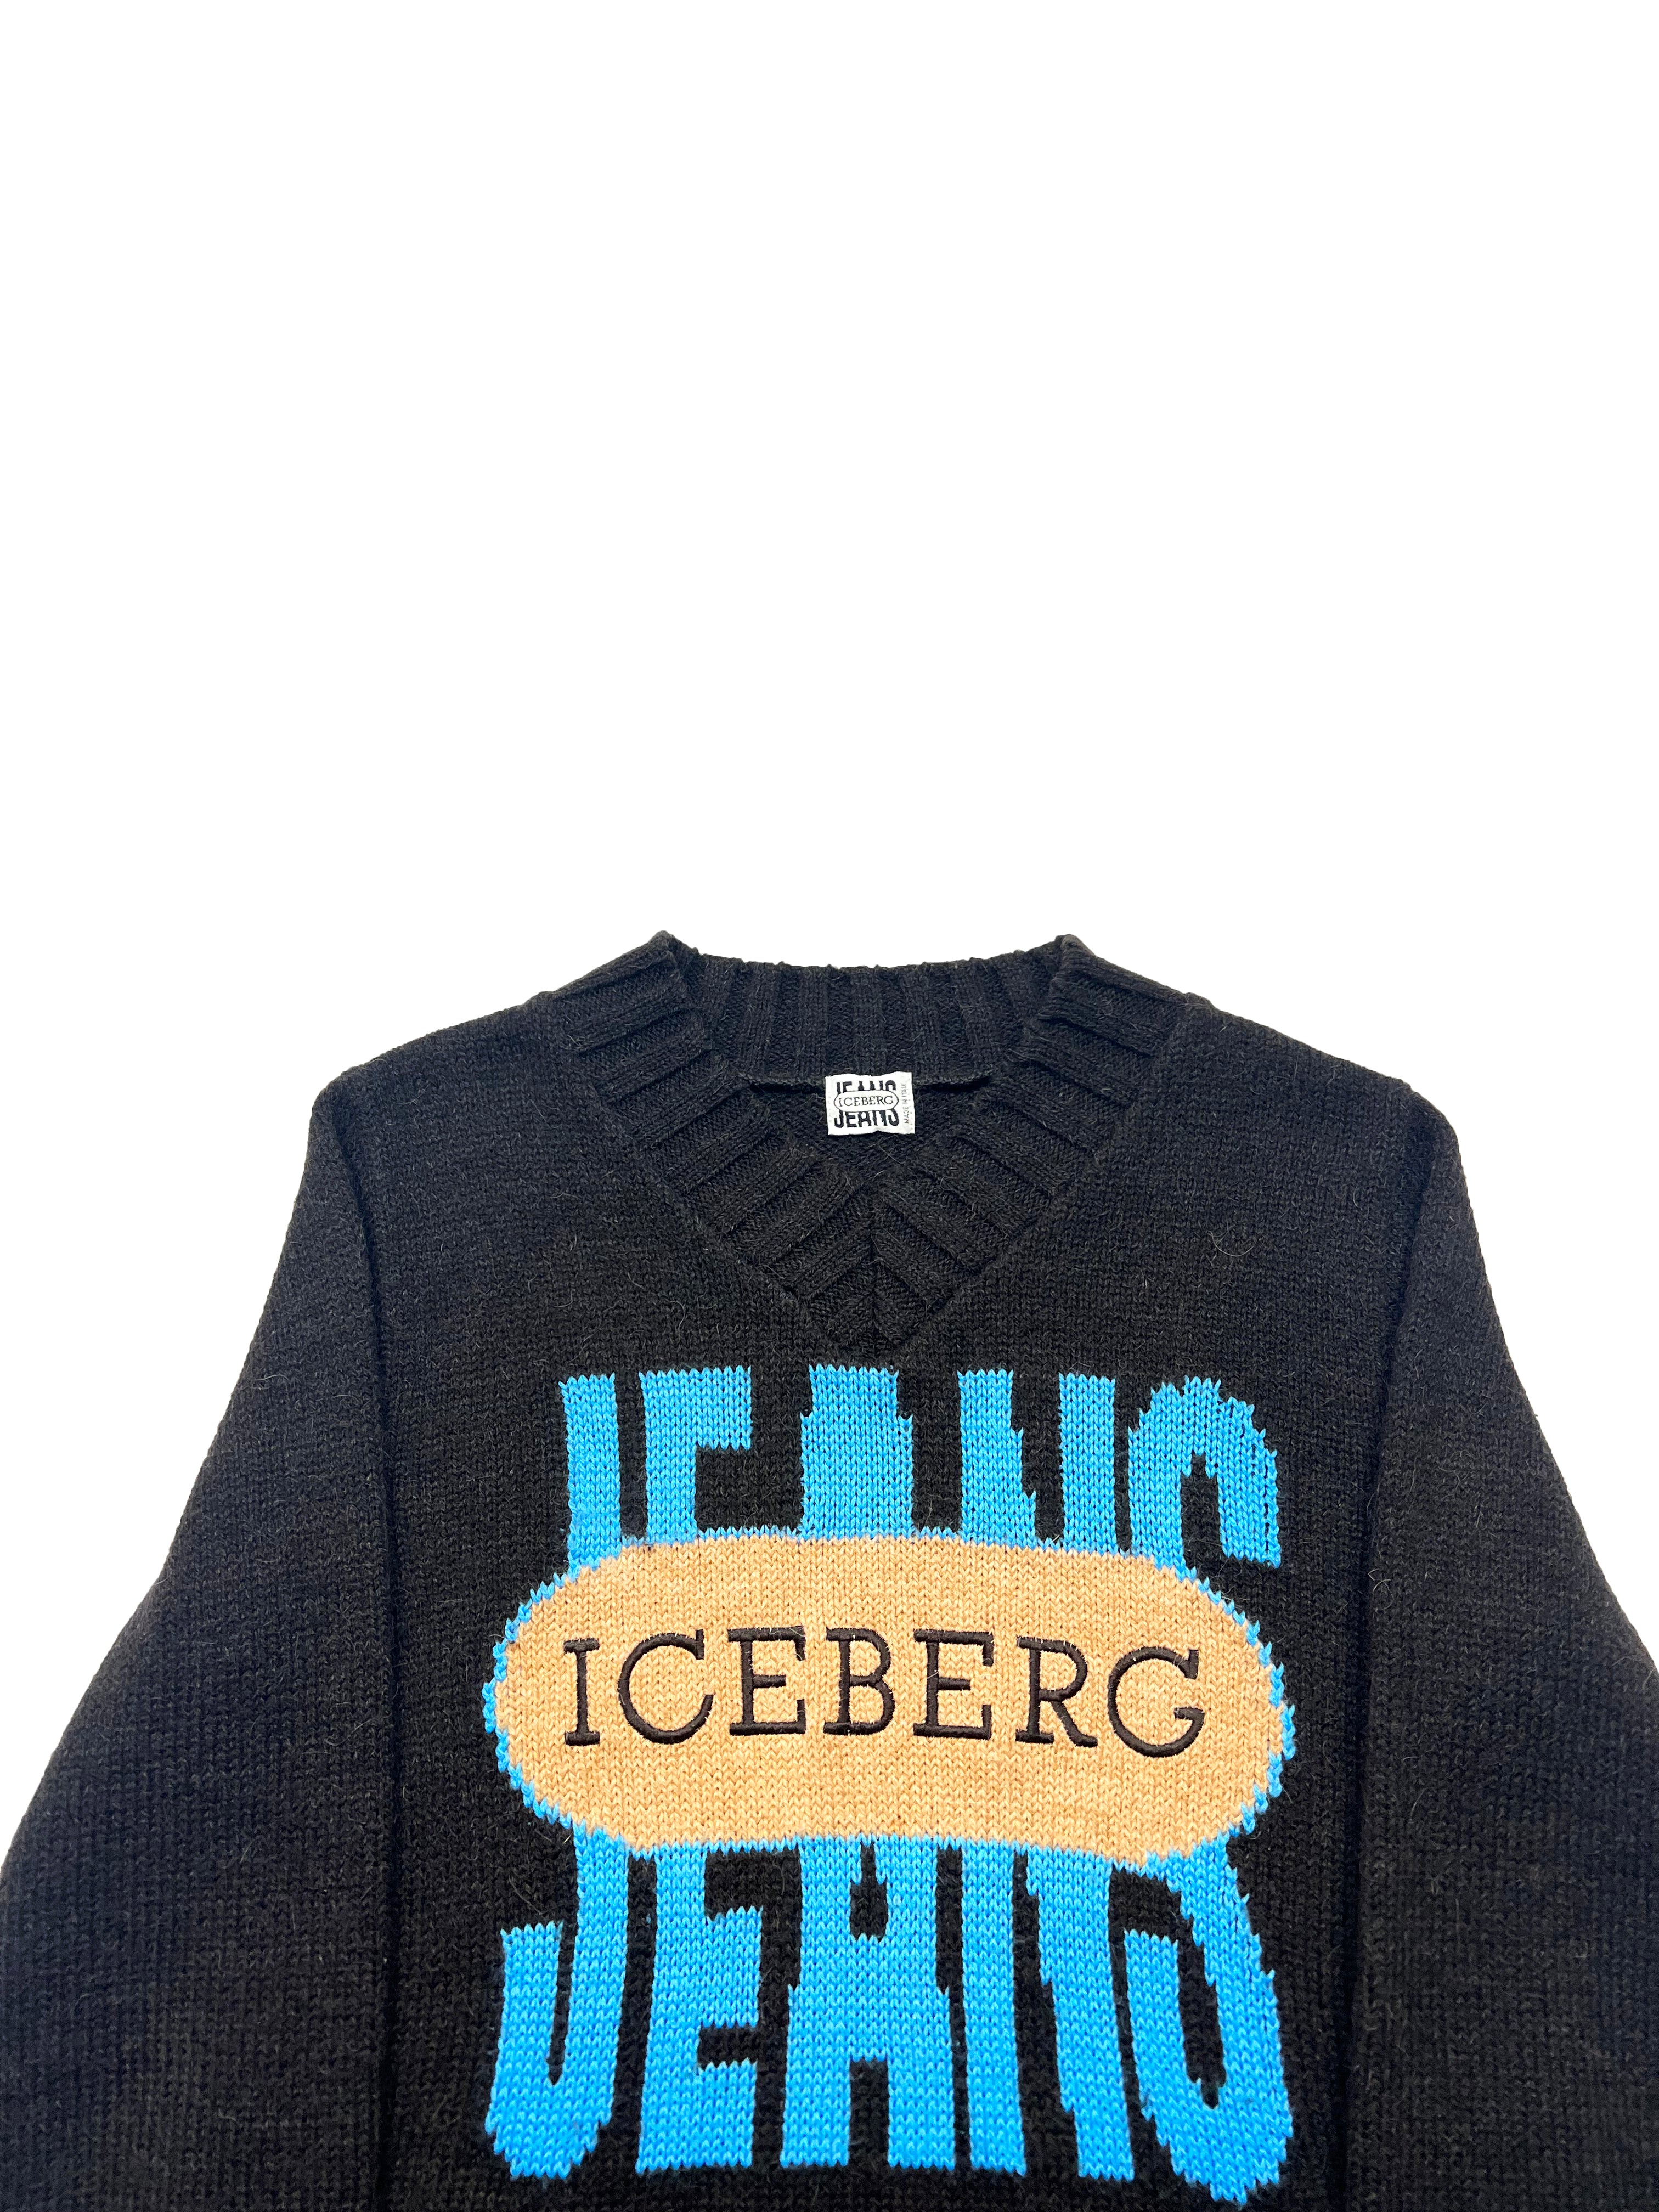 Iceberg Jeans Wool Knit Jumper 90's